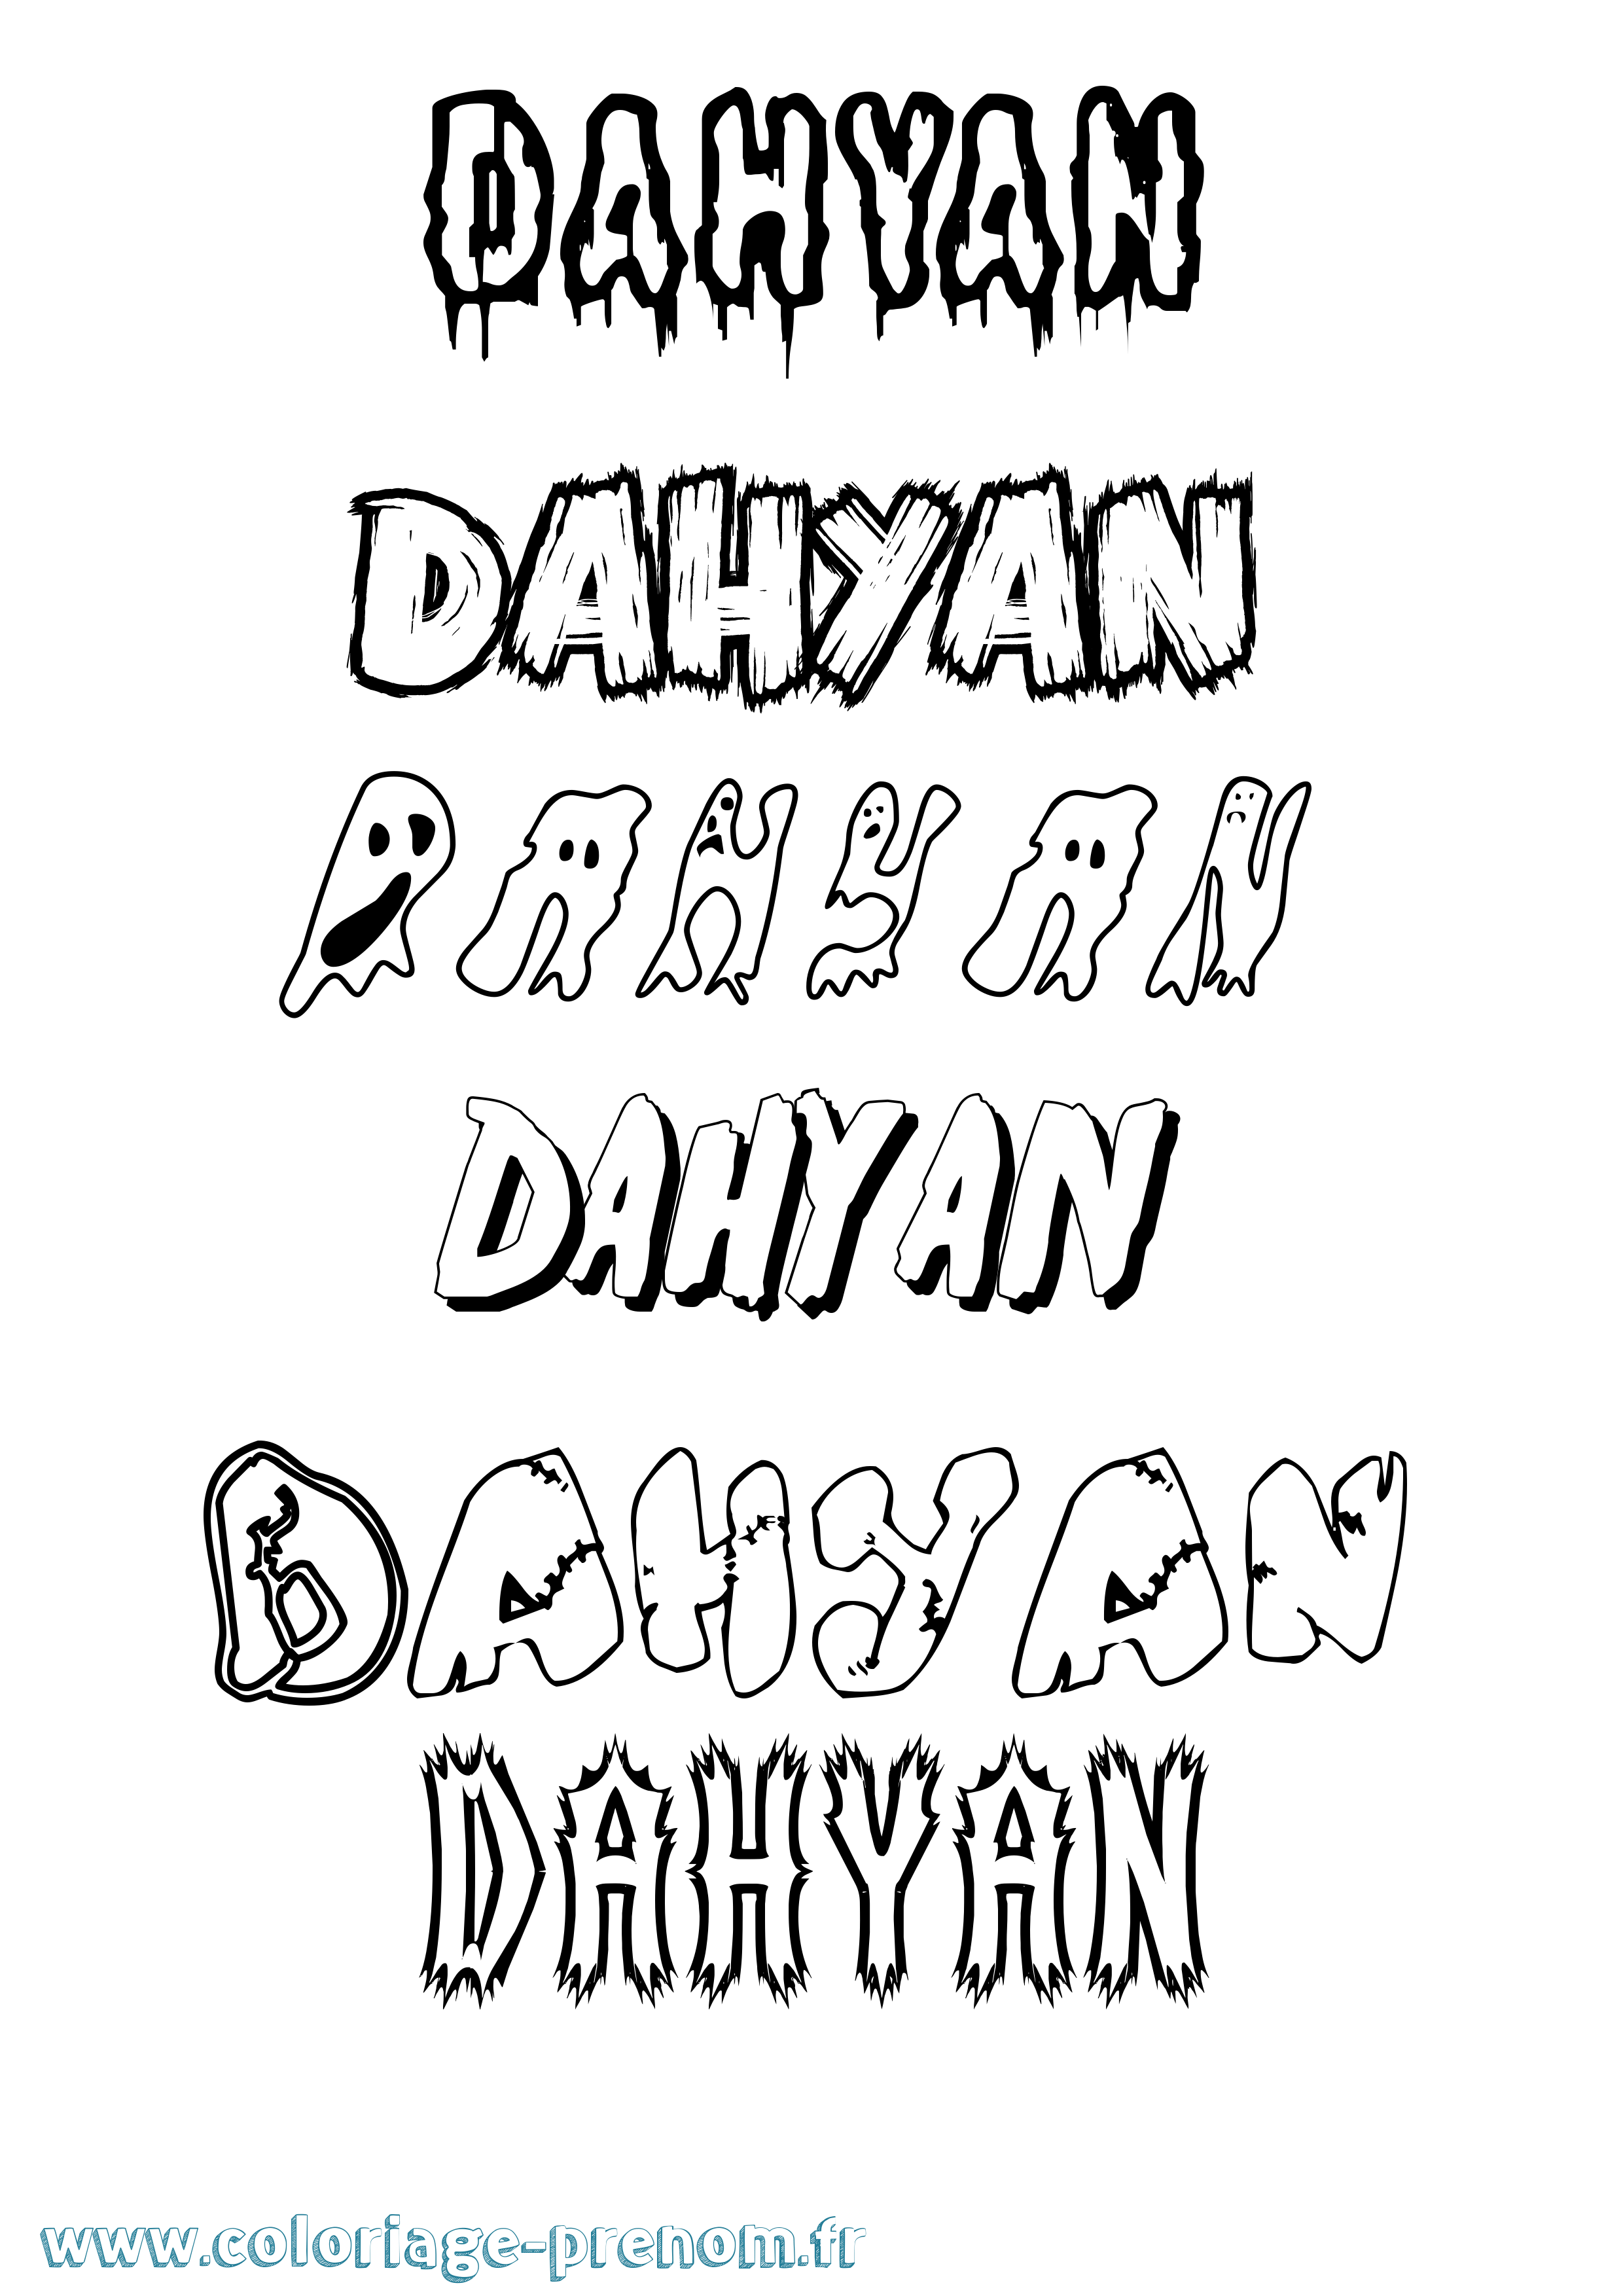 Coloriage prénom Dahyan Frisson